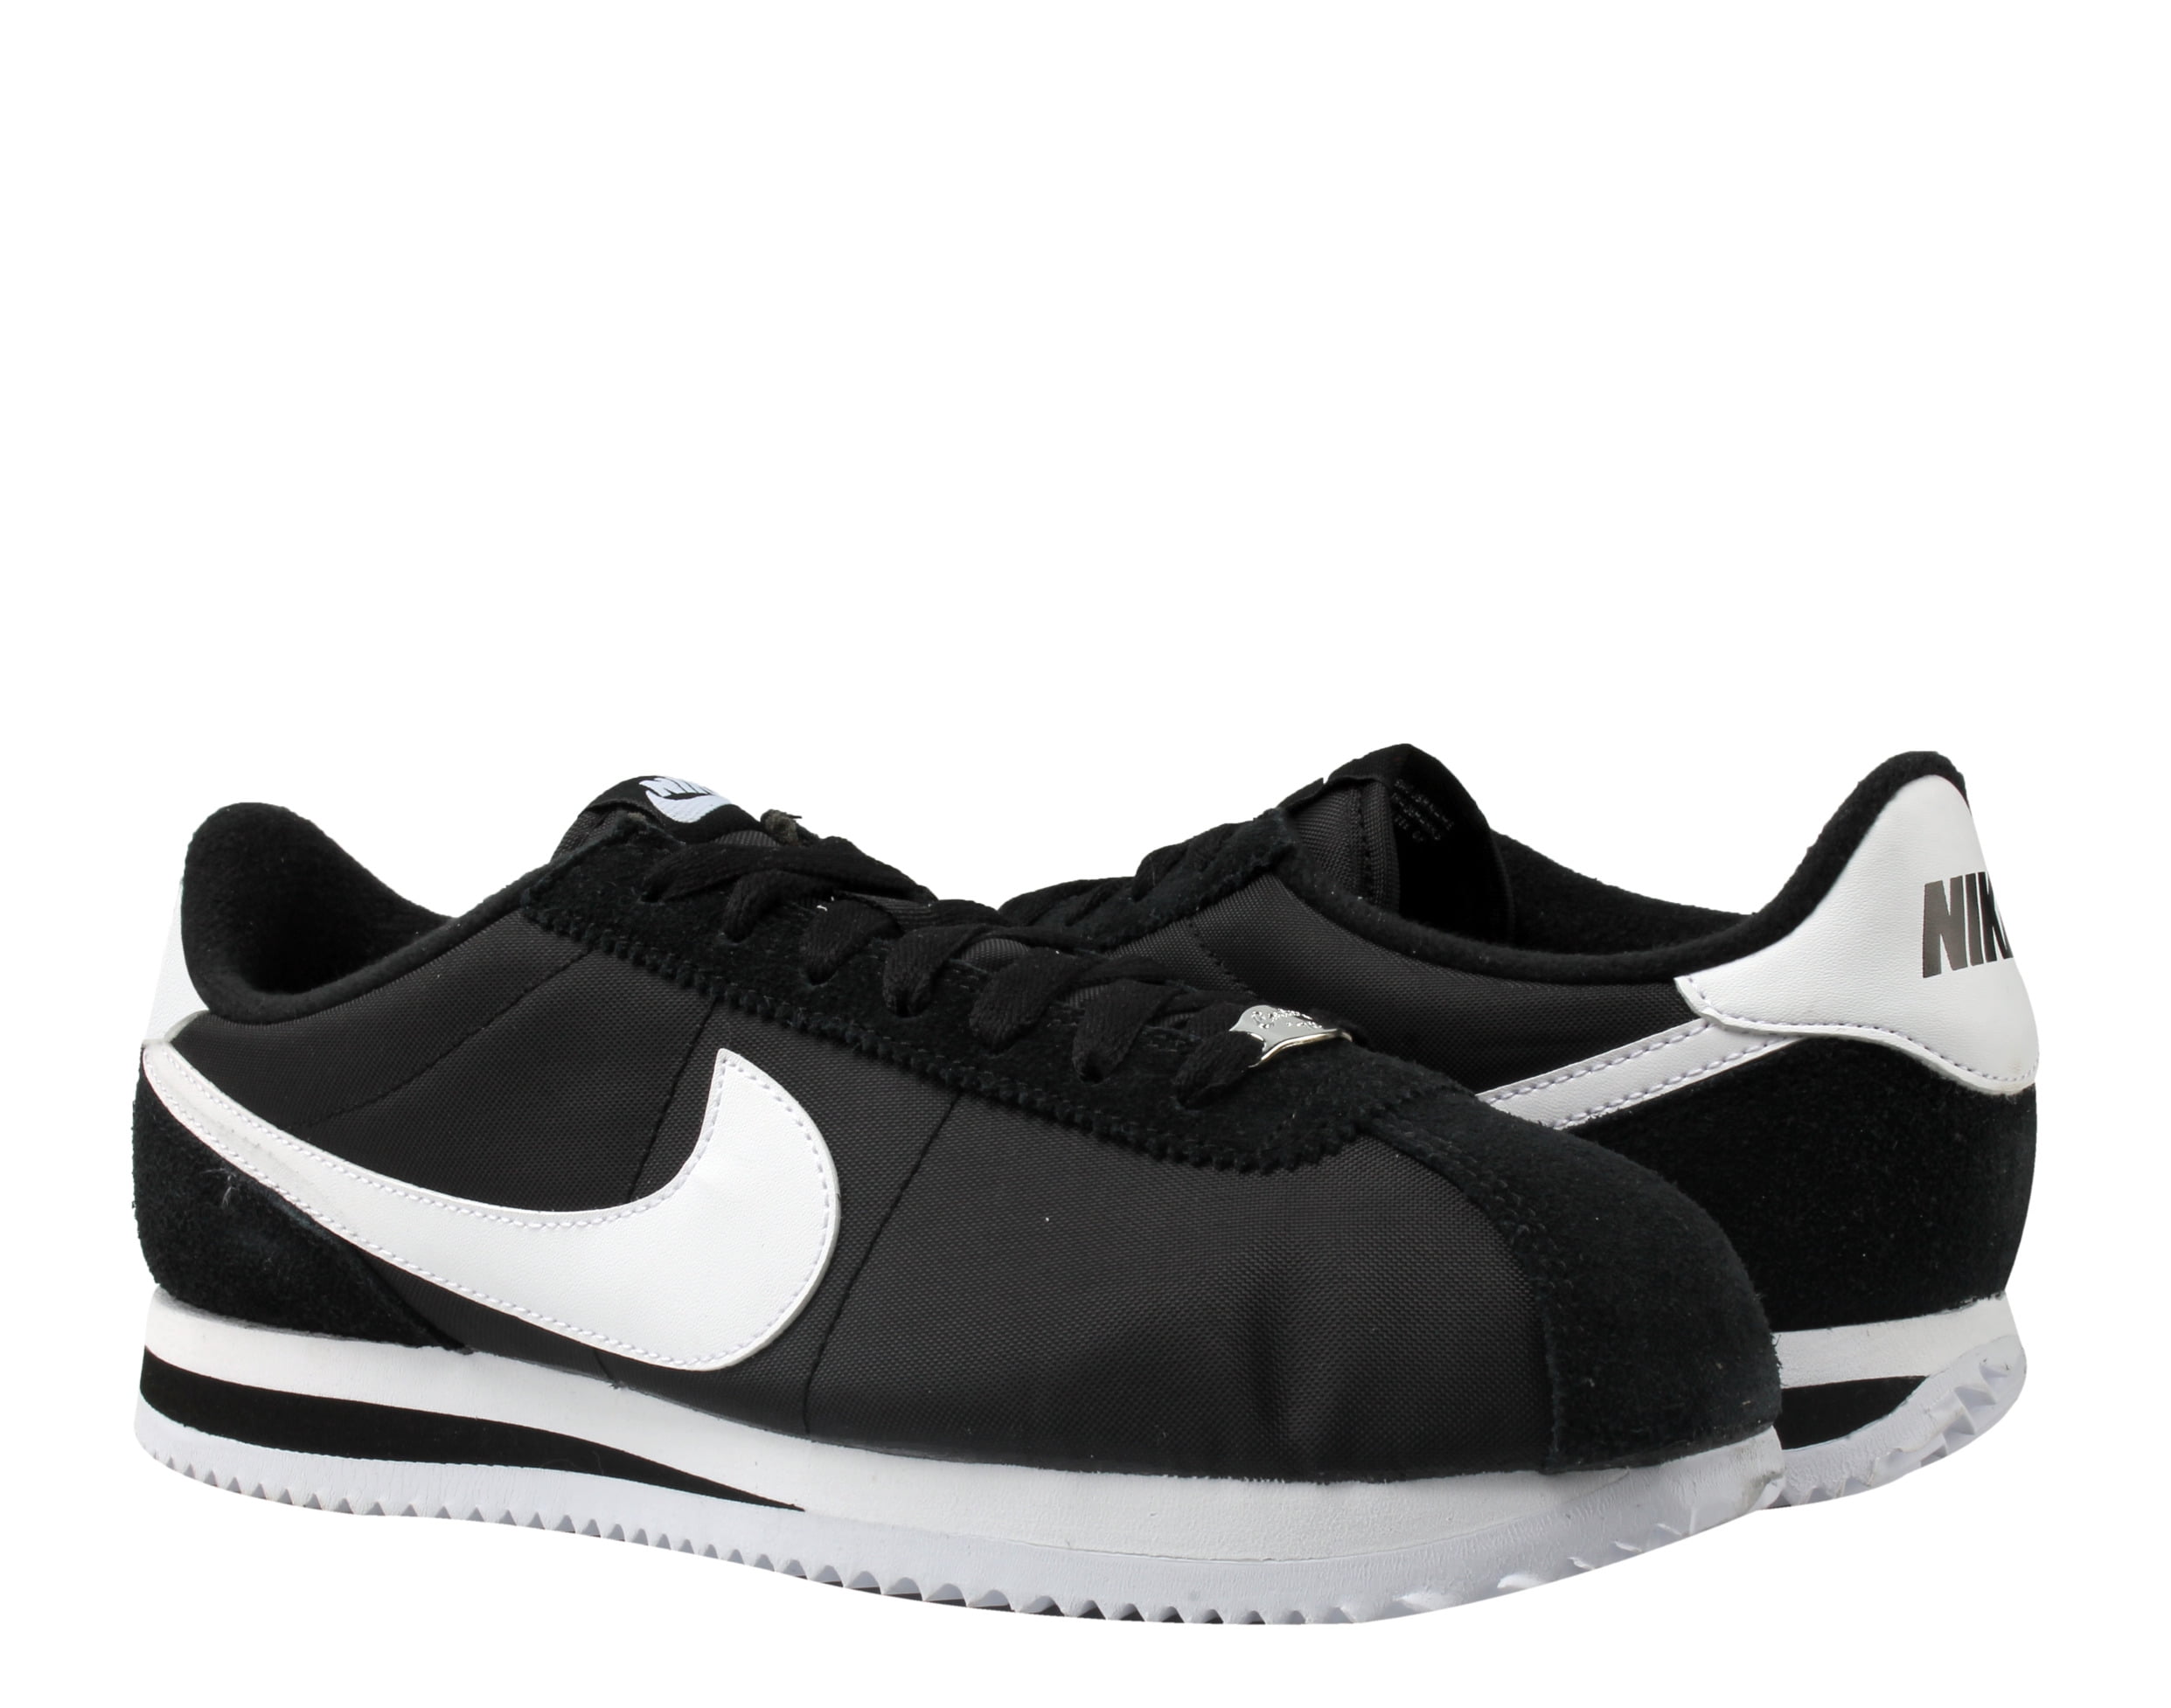 Prehistórico Viva mercenario Nike Cortez Basic Nylon Men's Shoes Black/White/Metallic Silver 819720-011  - Walmart.com